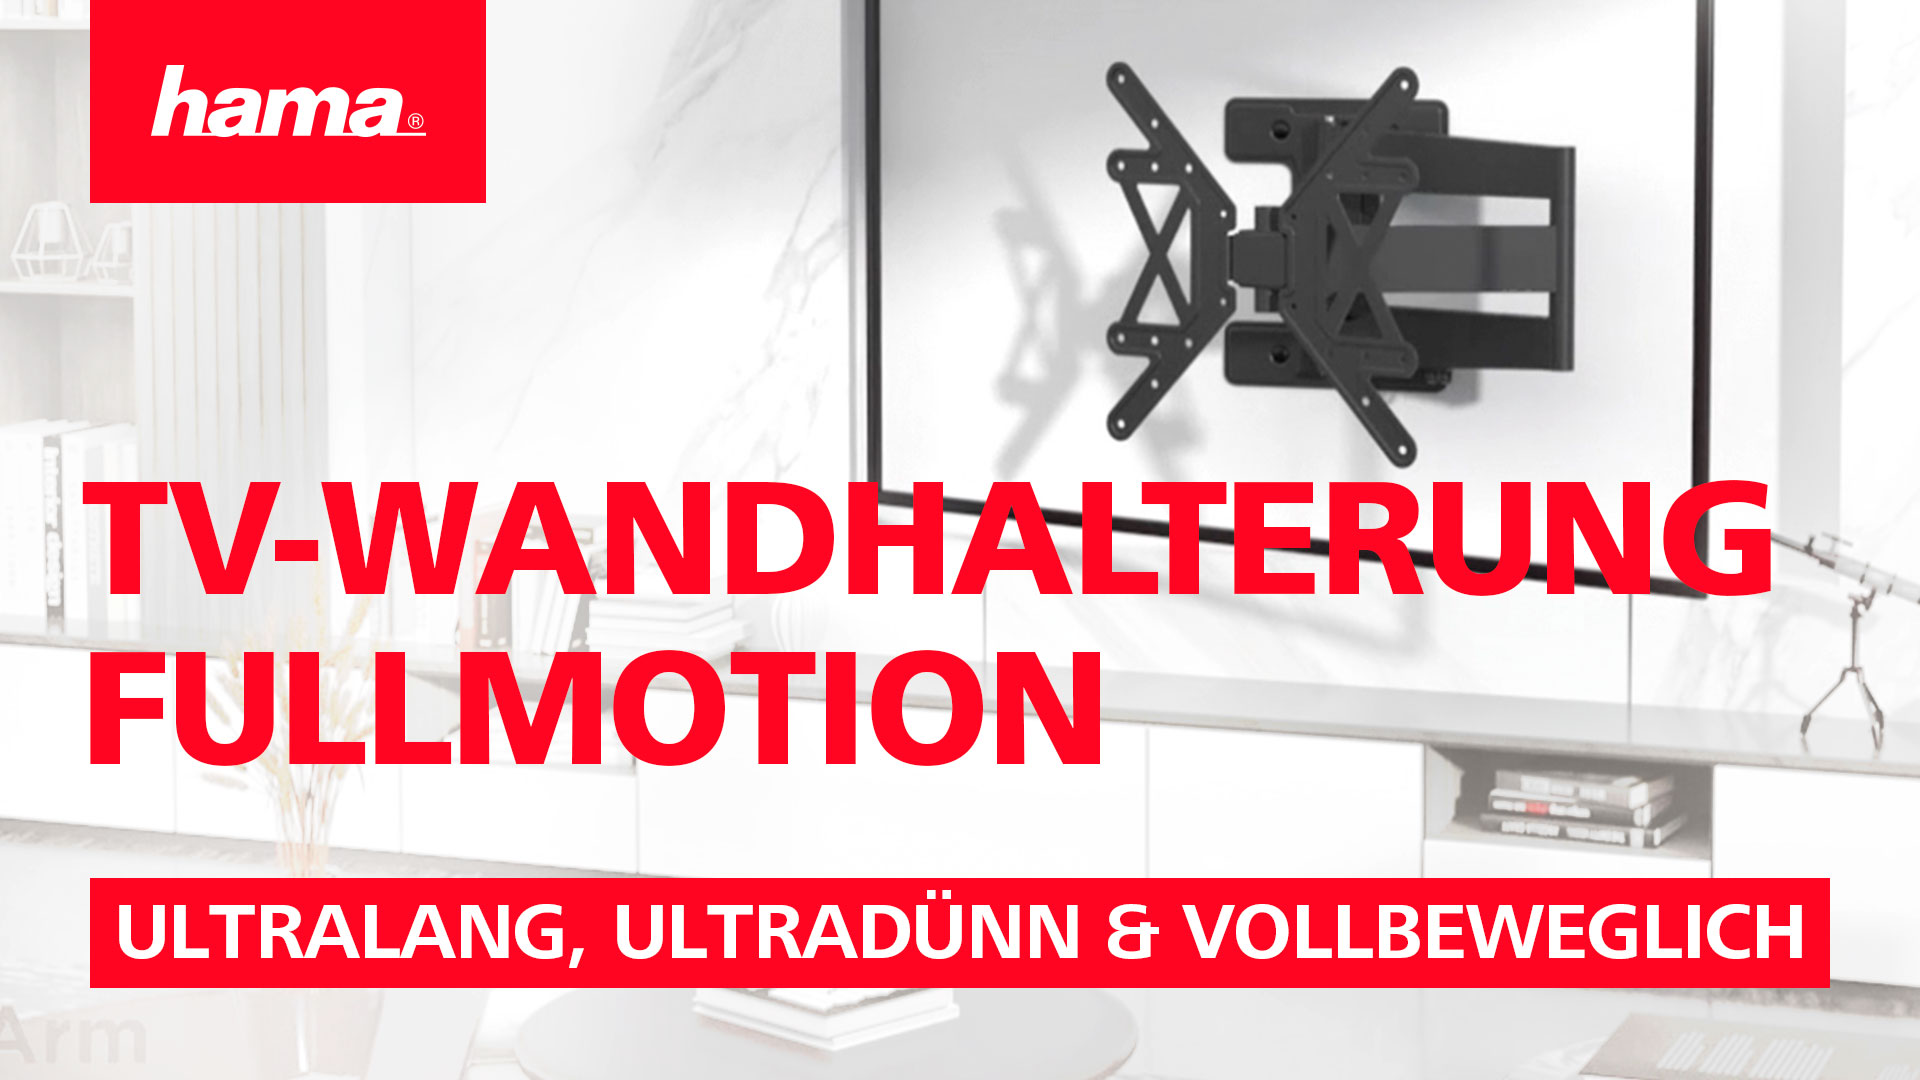 Hama Ultralange TV-Wandhalterung FULLMOTION